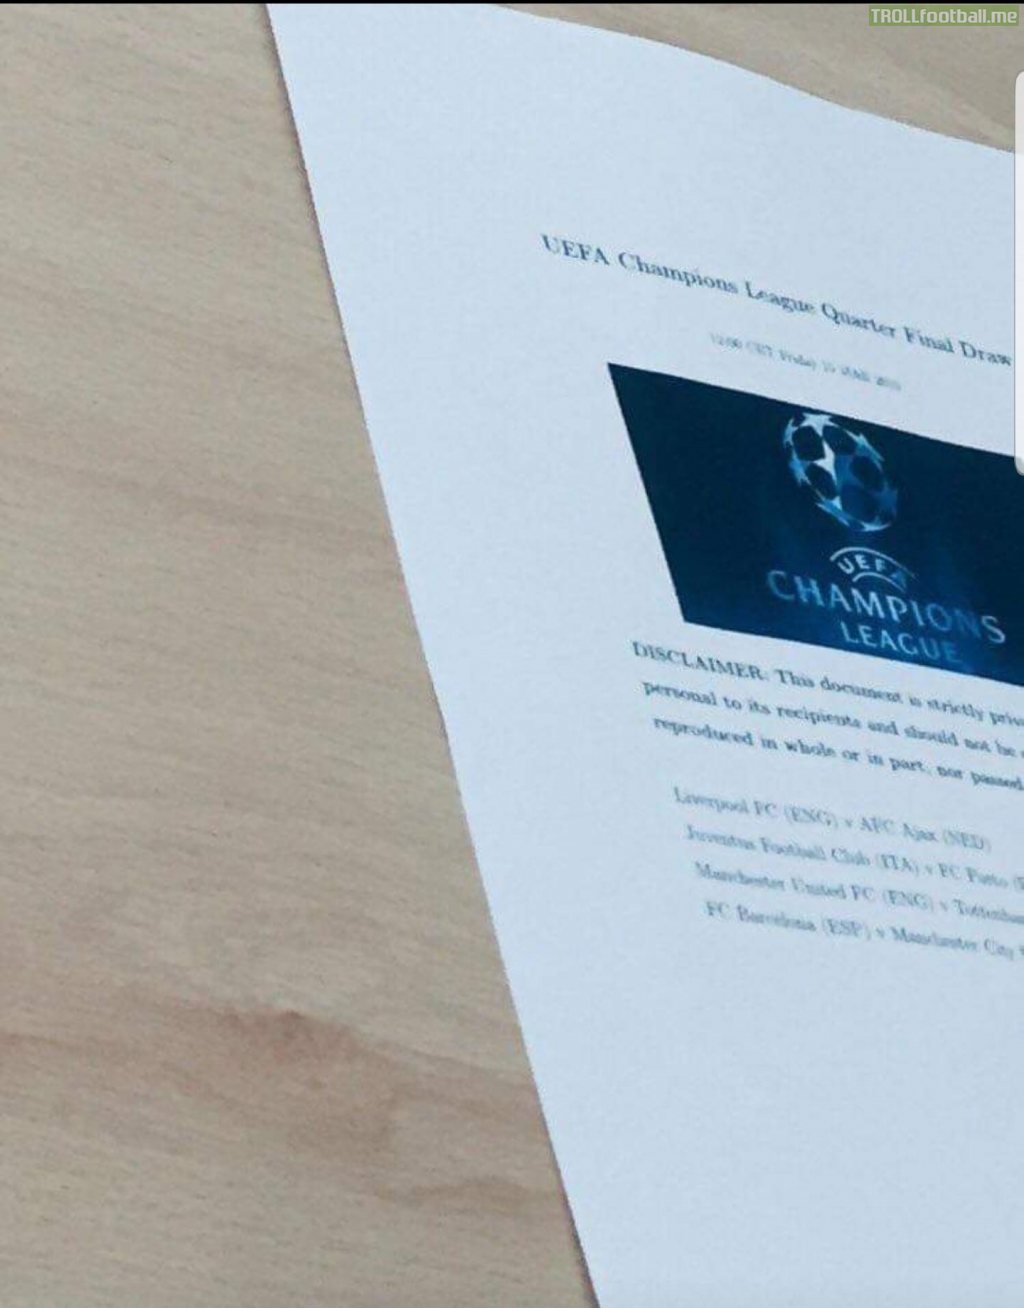 Uefa champions league QF draws leaked